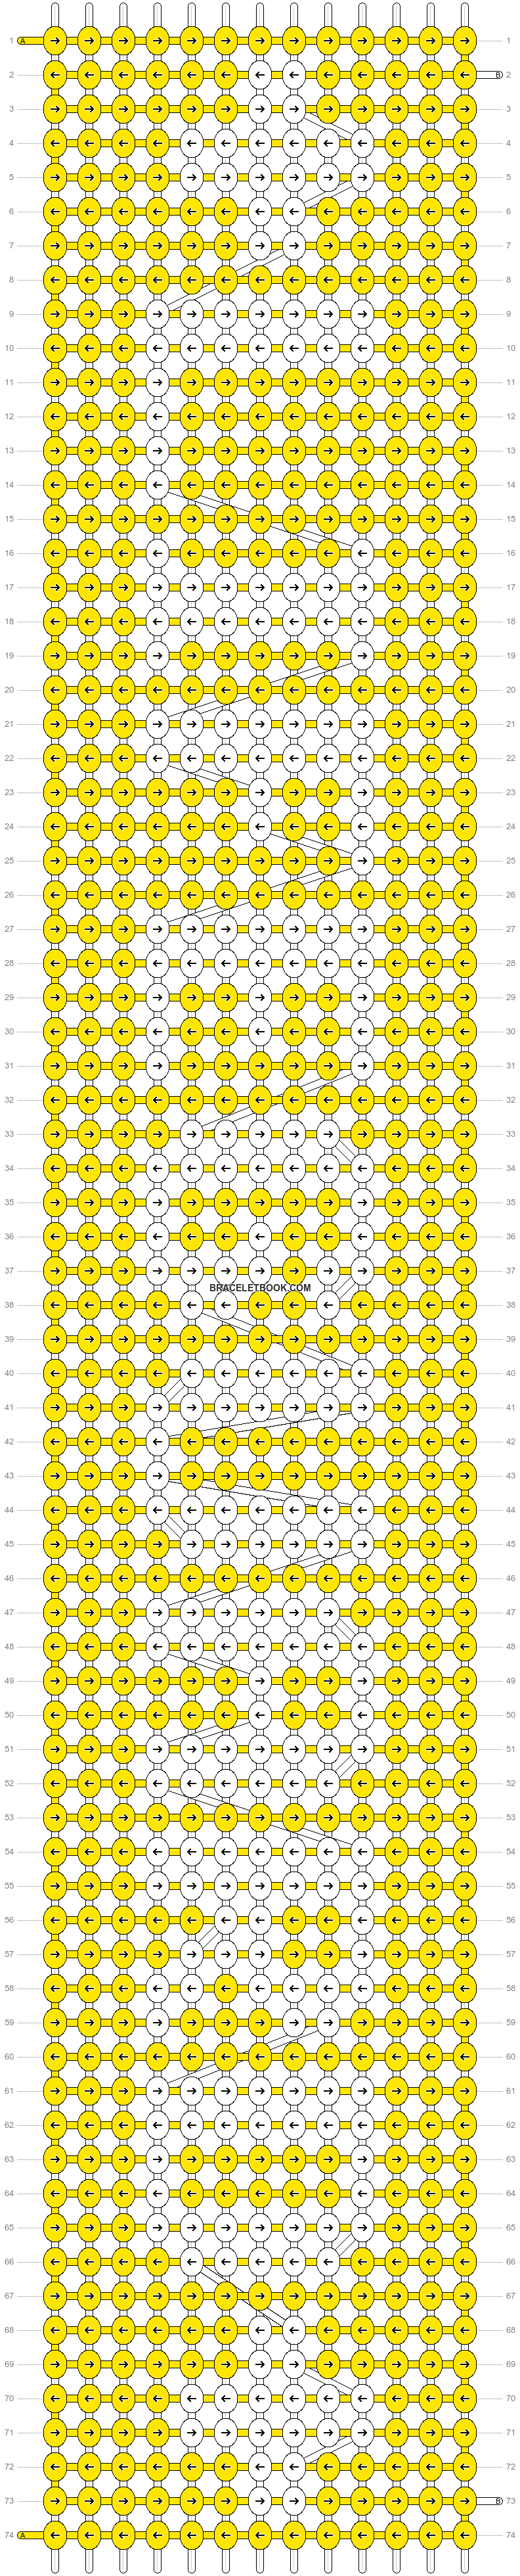 Alpha pattern #35686 variation #61938 pattern